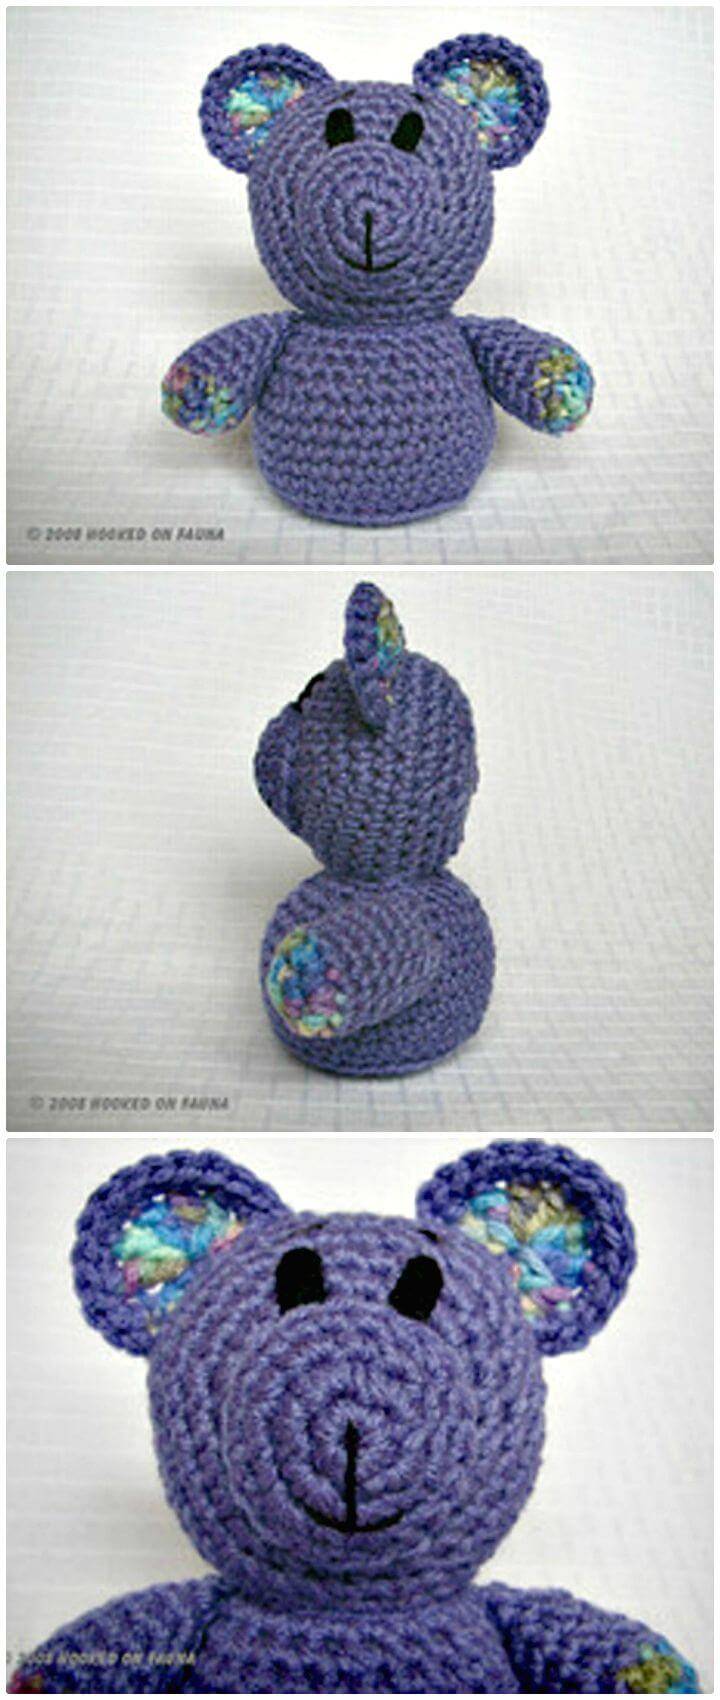 How To Crochet Lubi The Teddy Bear - Free Pattern